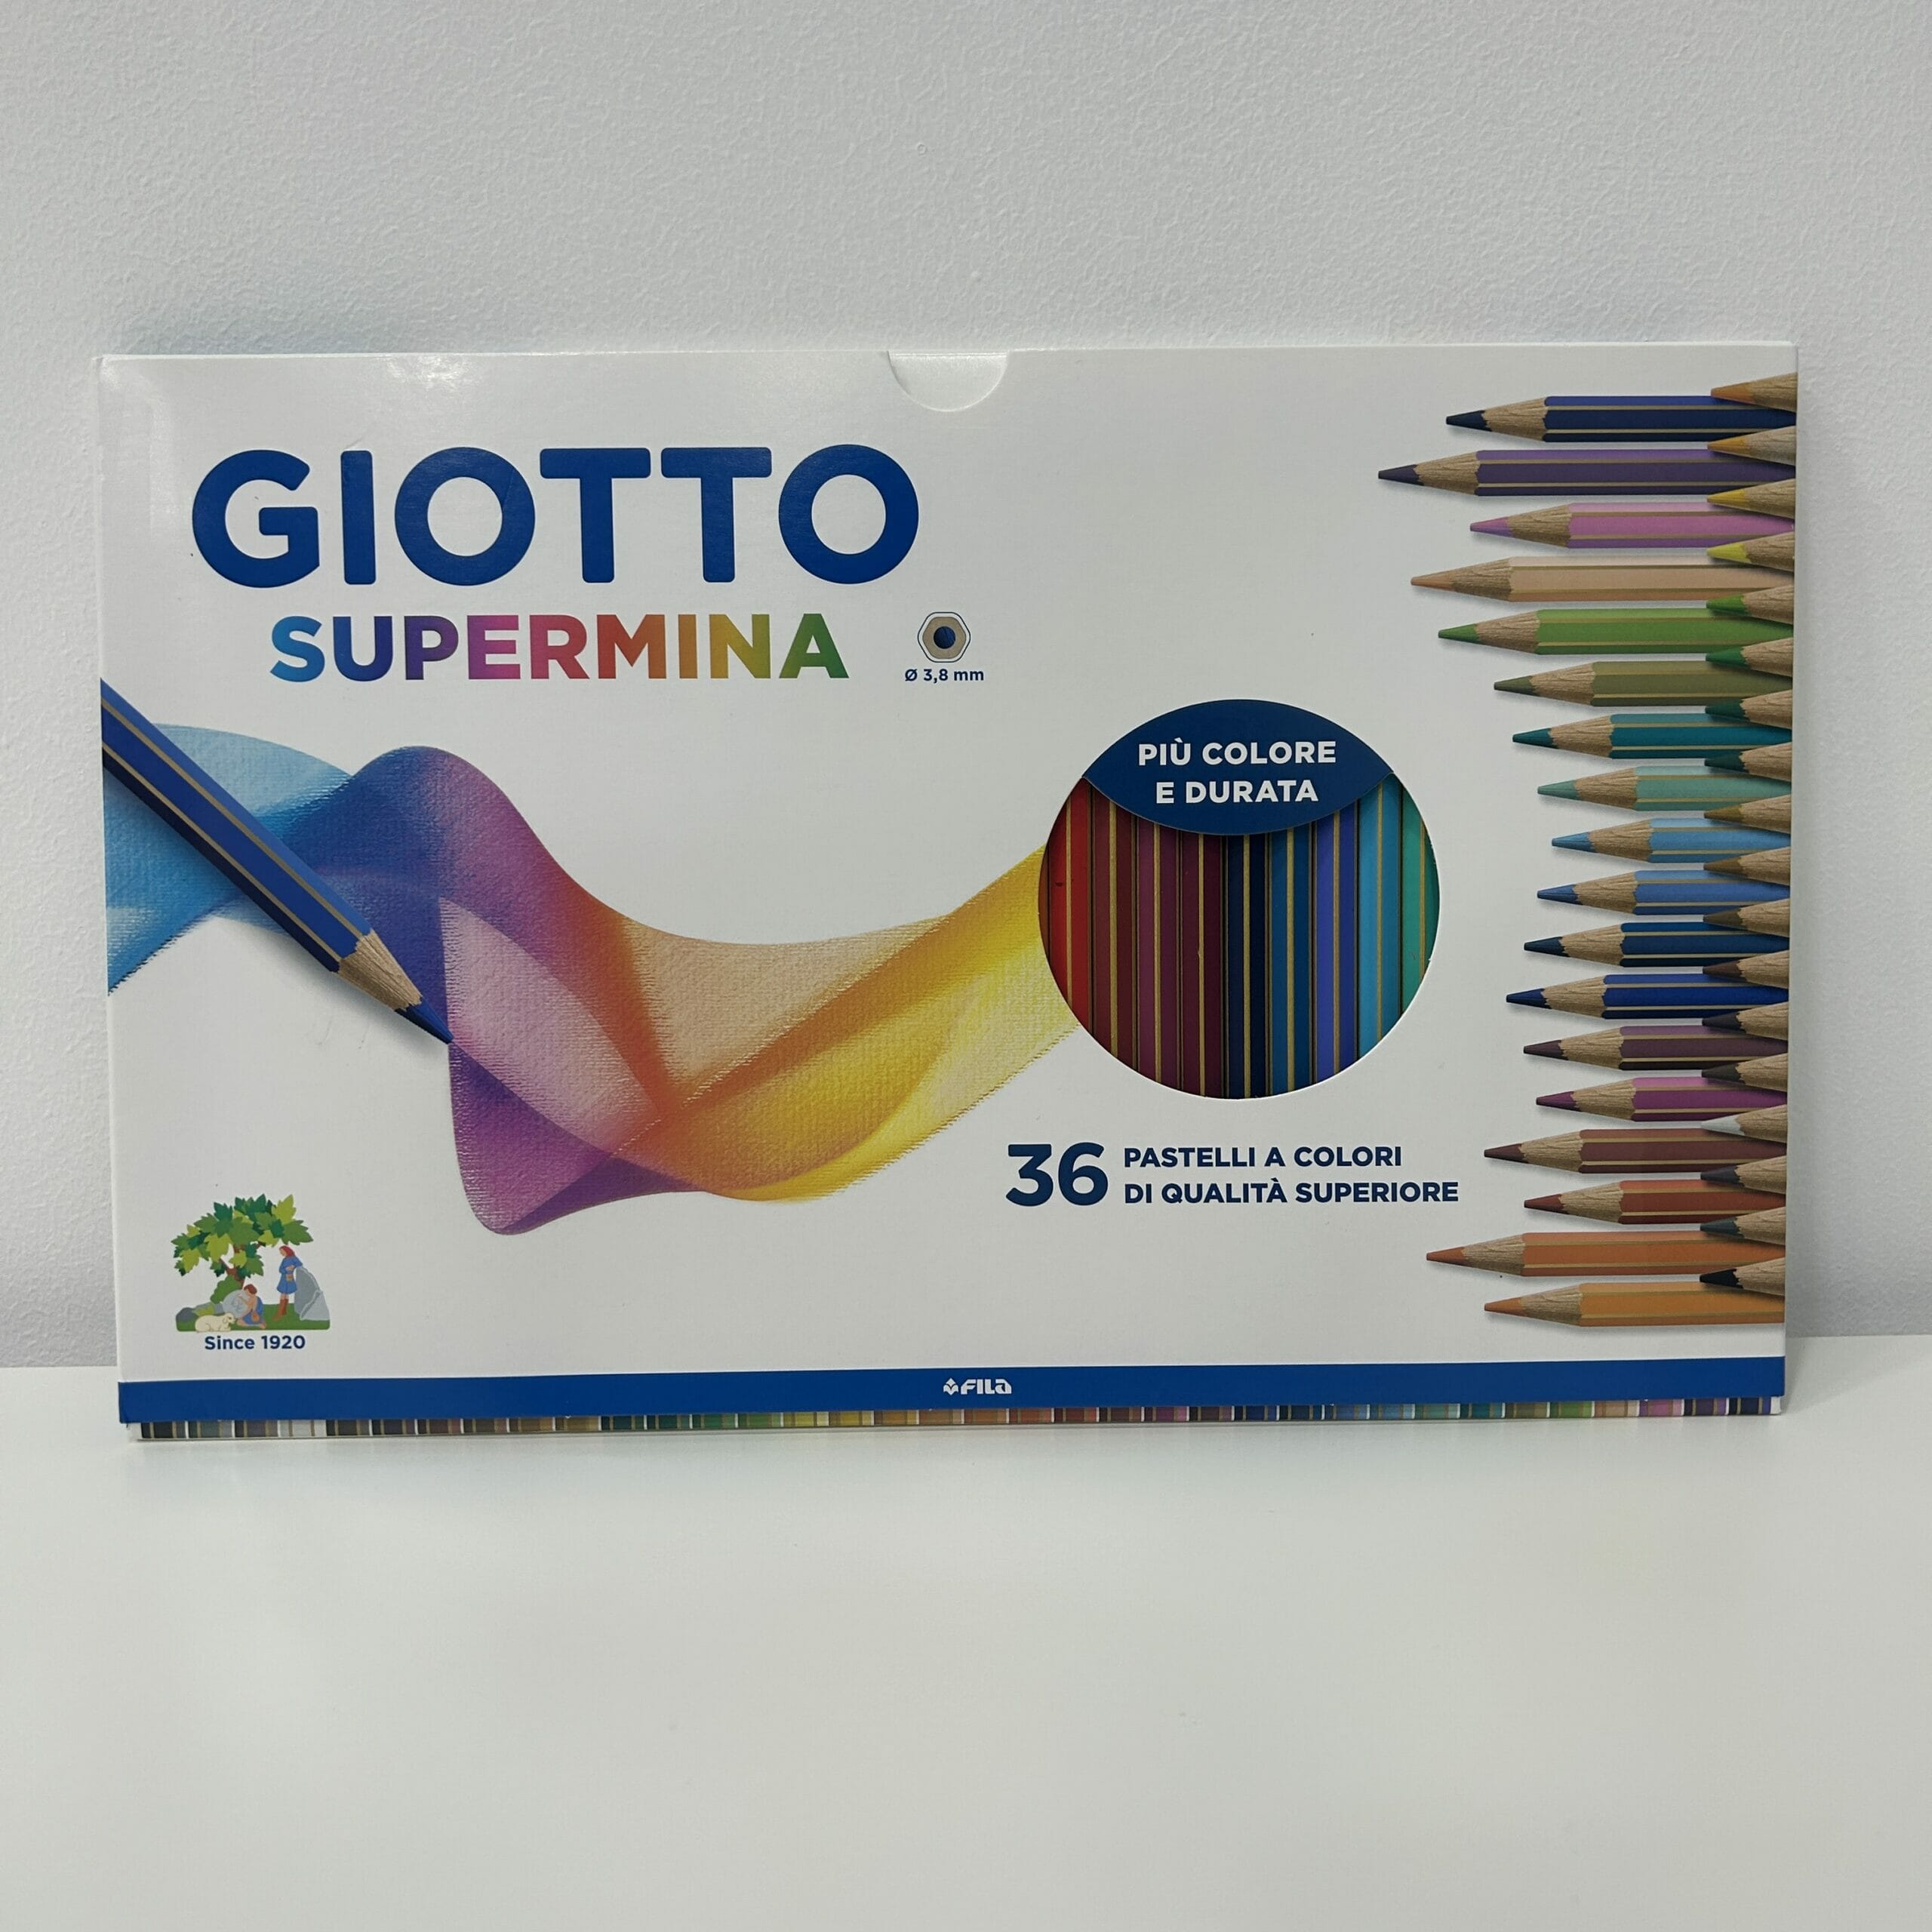 Giotto supermina 36 pastelli vari colori